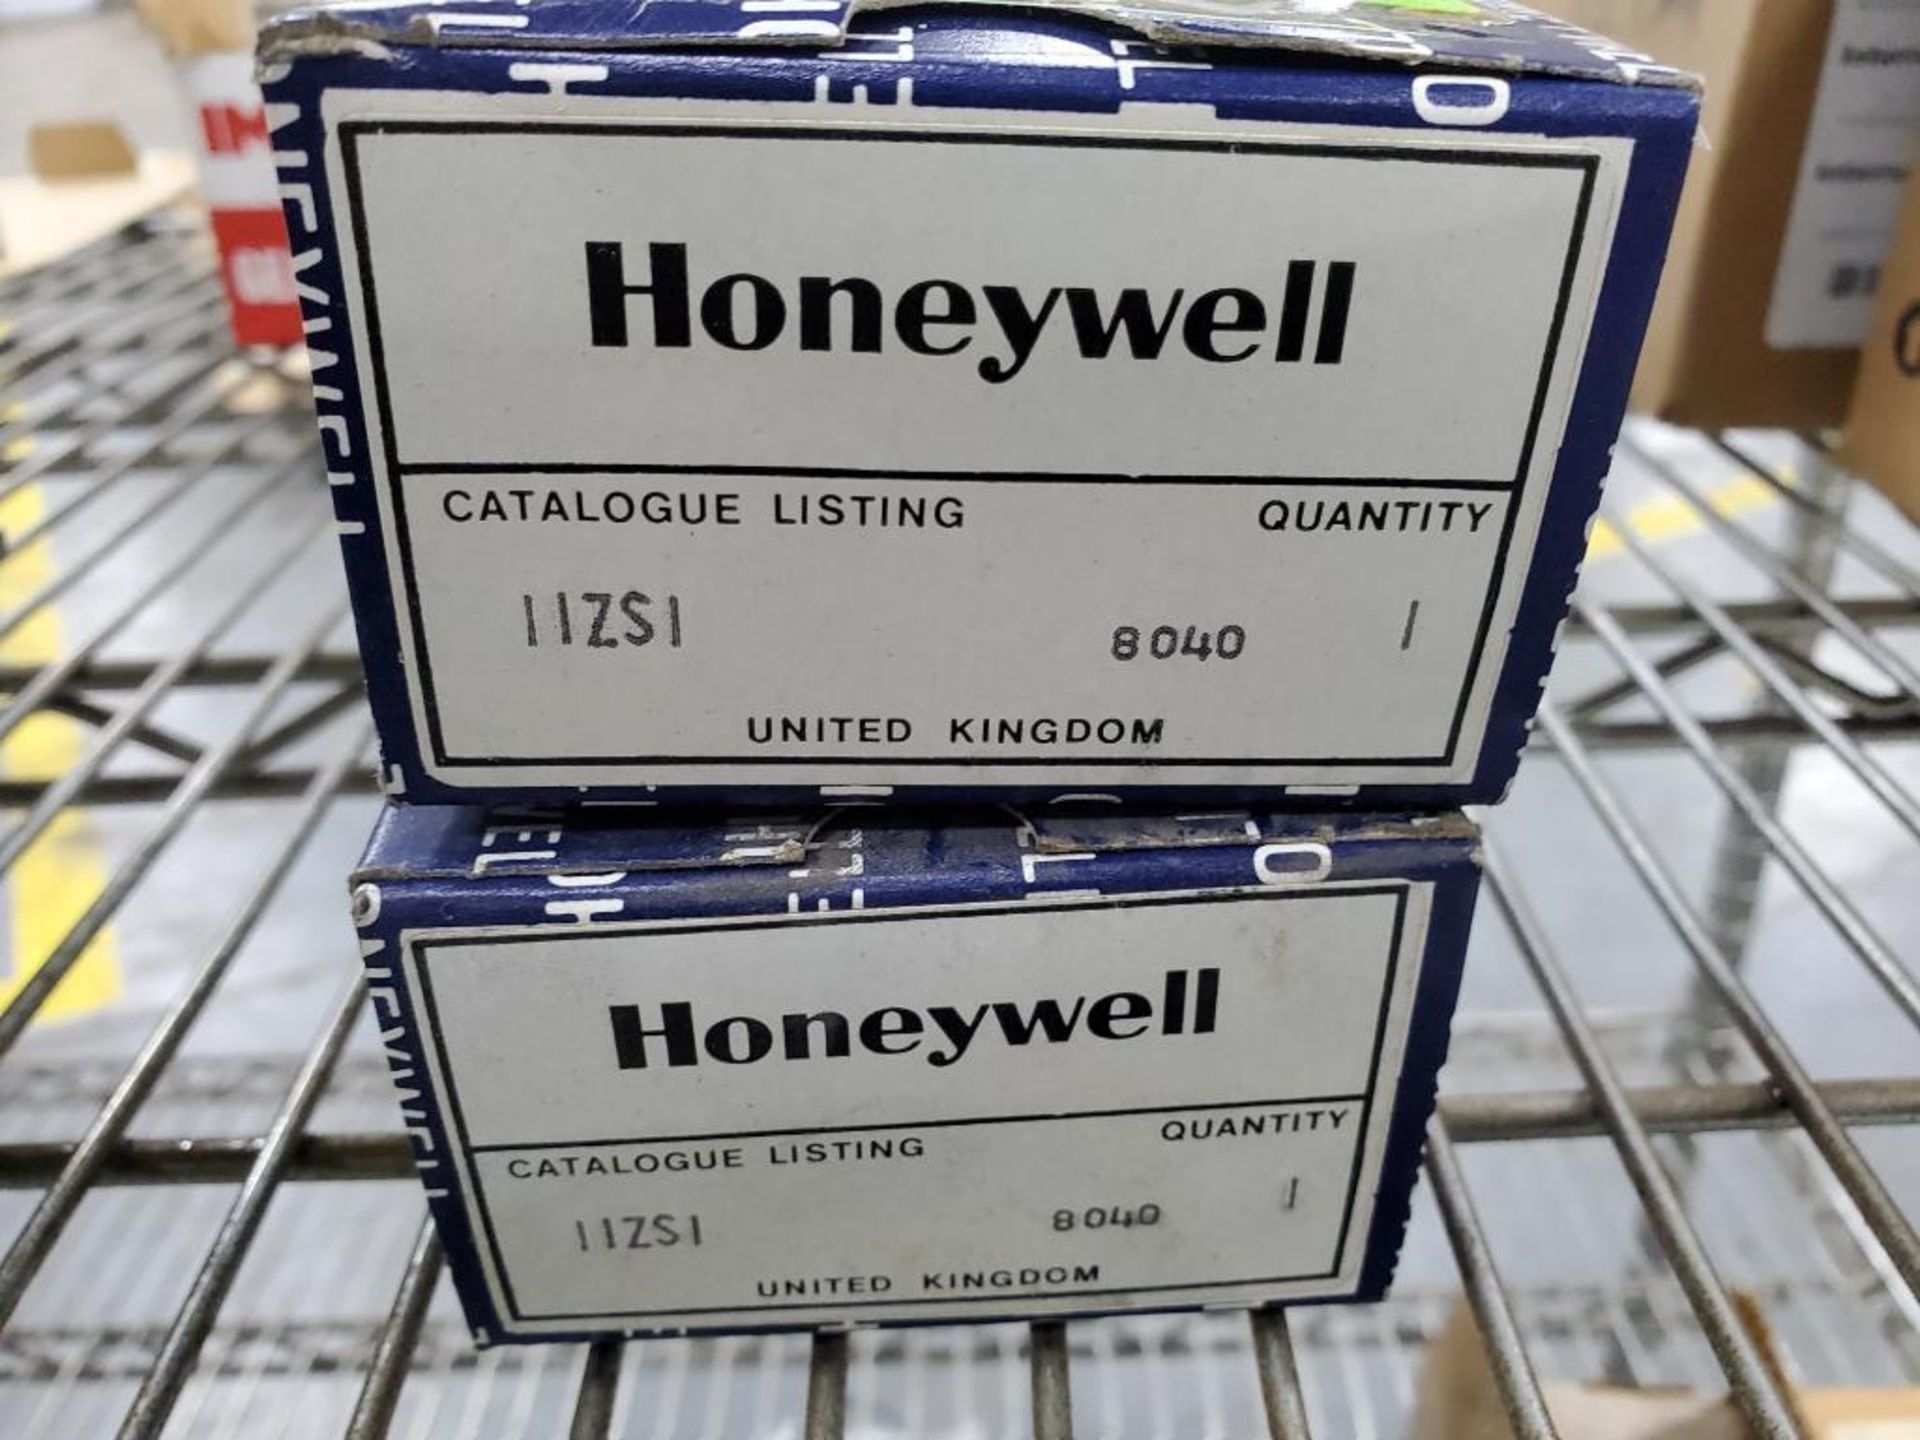 Qty 2 - Honeywell. Model 11ZS1. New in box.